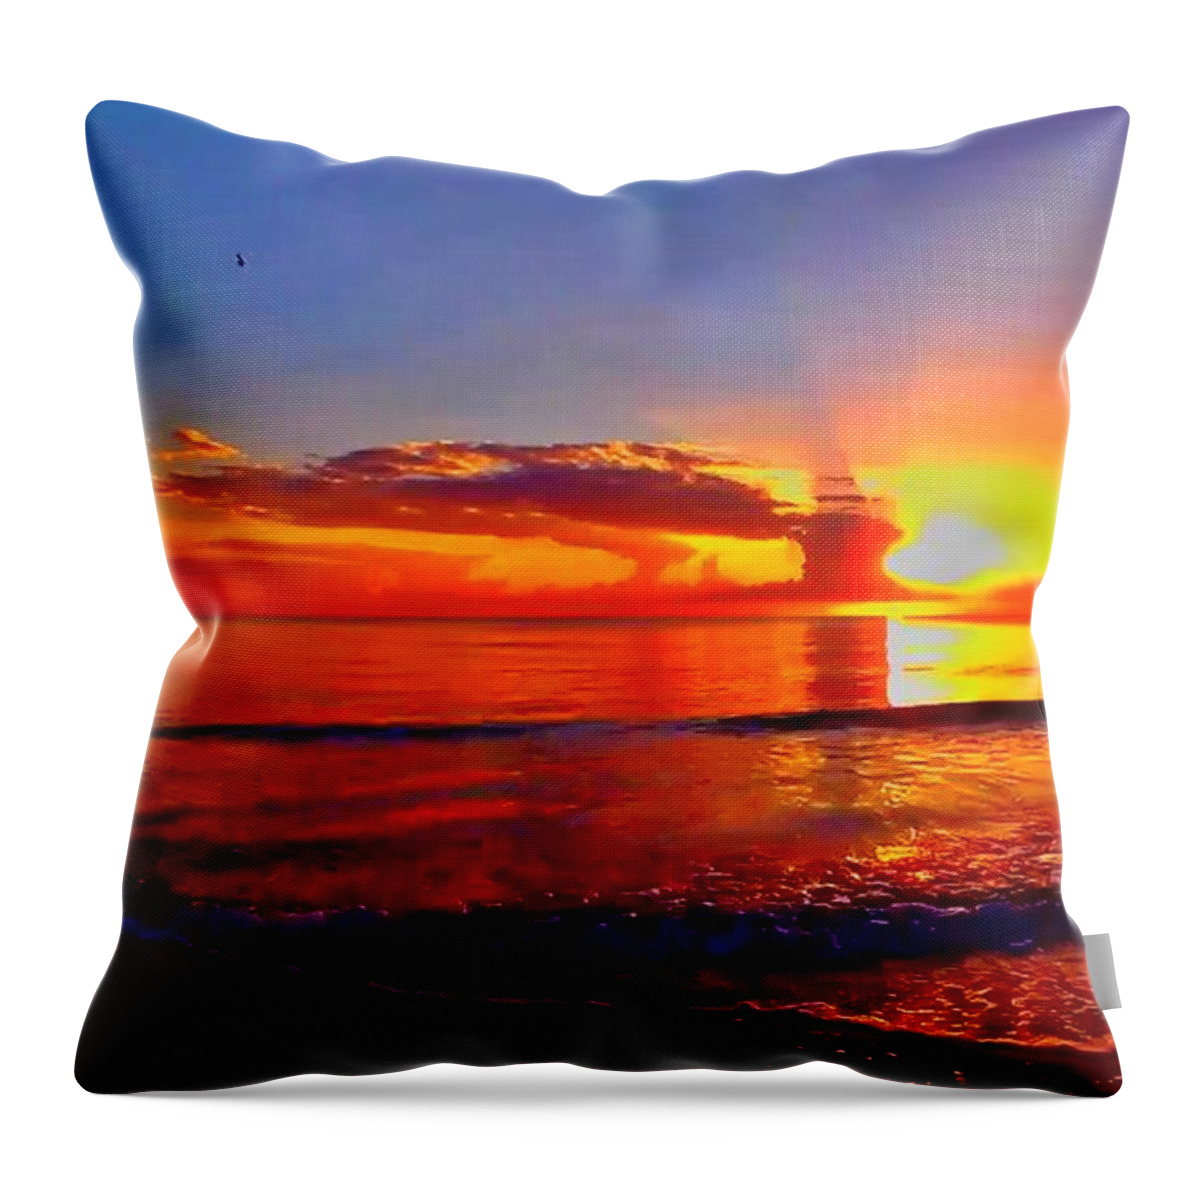 Sunrise Throw Pillow featuring the photograph Sunrise Beach 48 by Rip Read